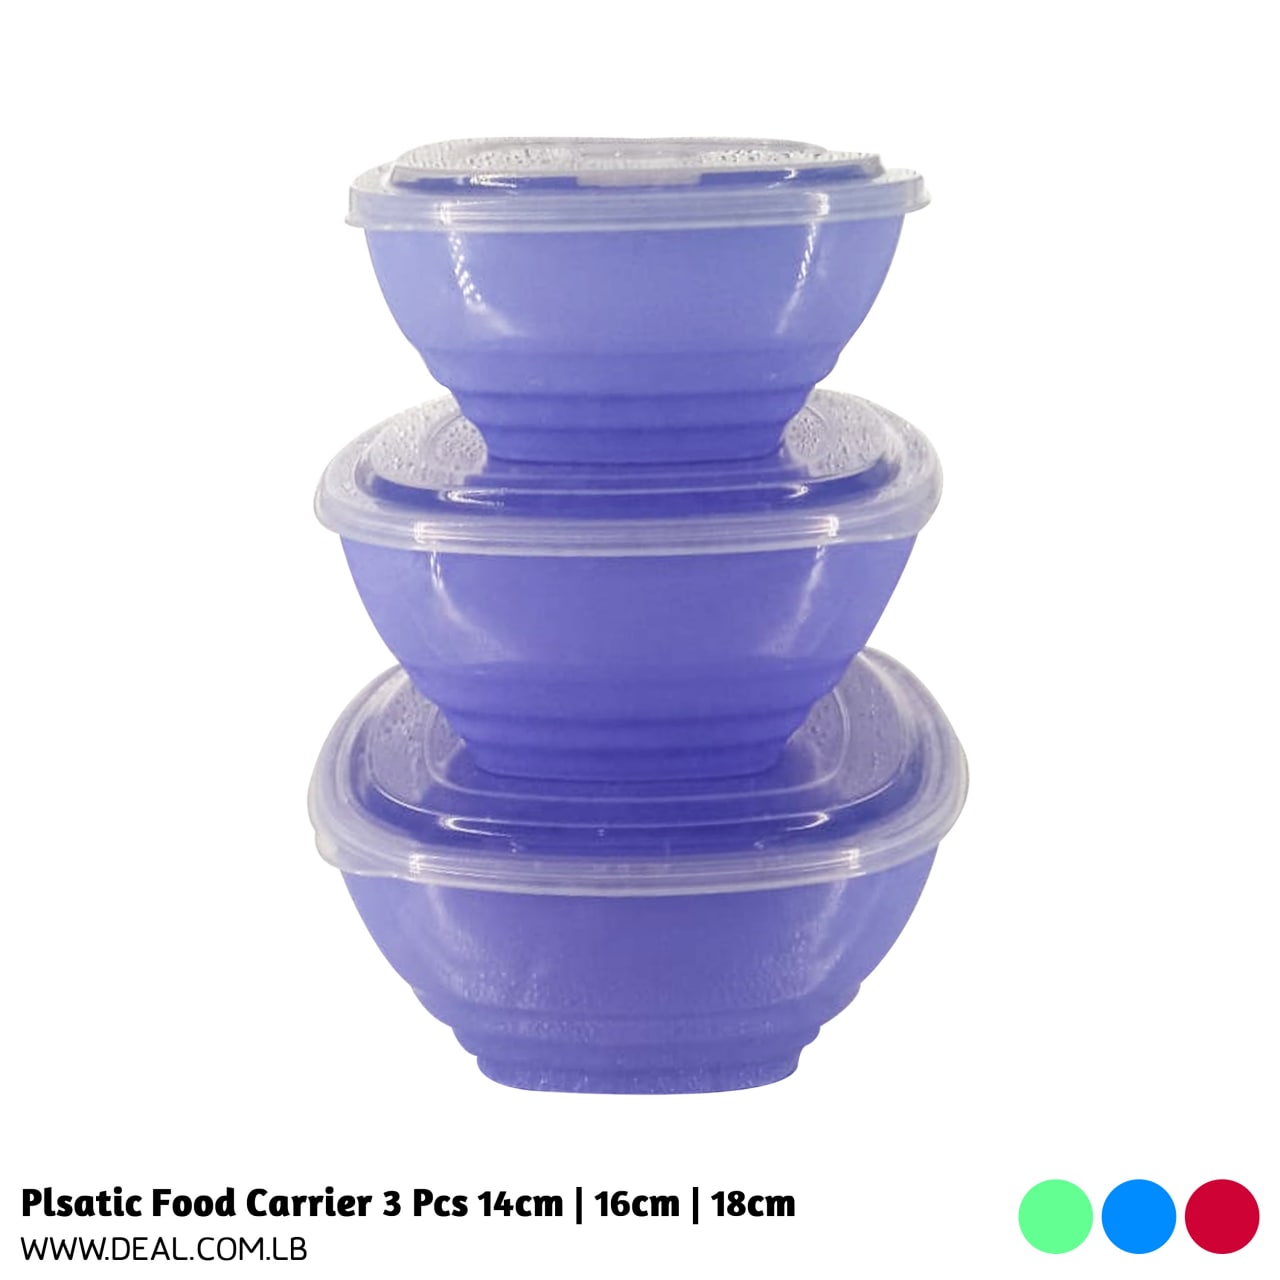 Colored Plastic Food Carrier 3 Pcs